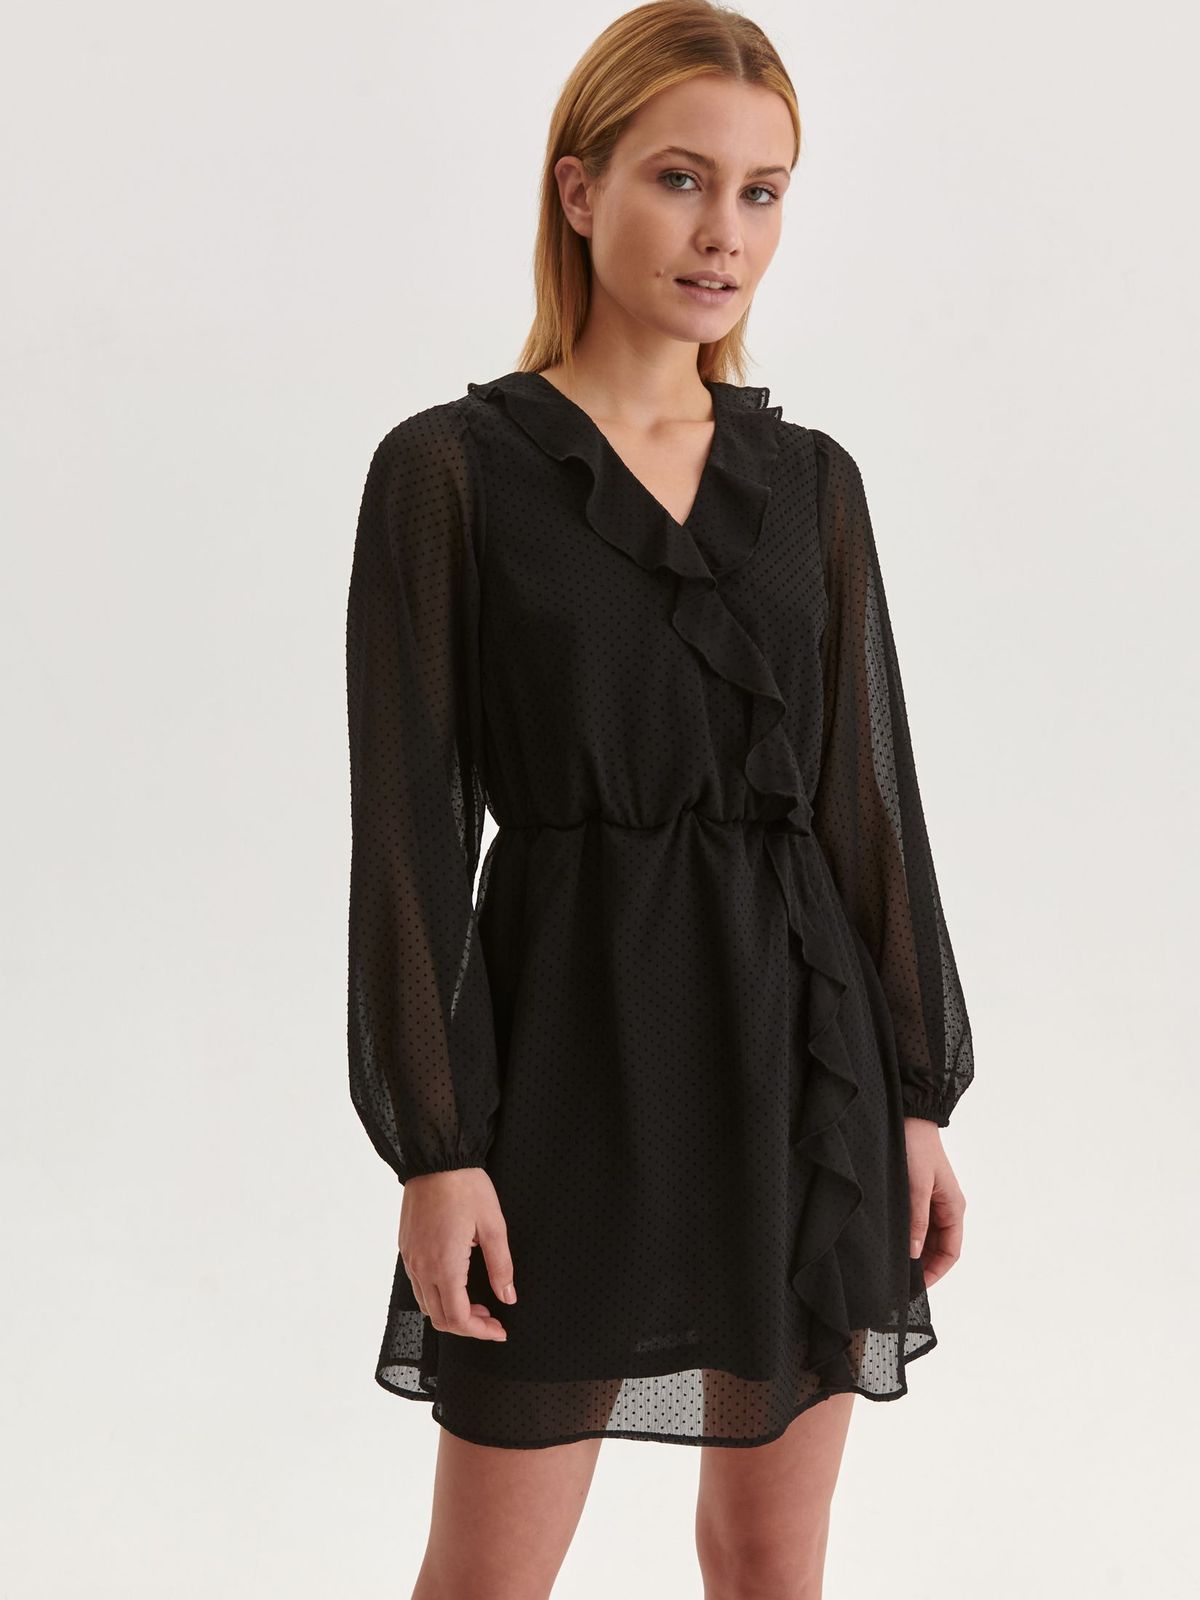 Black dress from veil fabric plumeti short cut cloche with elastic waist with ruffle details 2 - StarShinerS.com